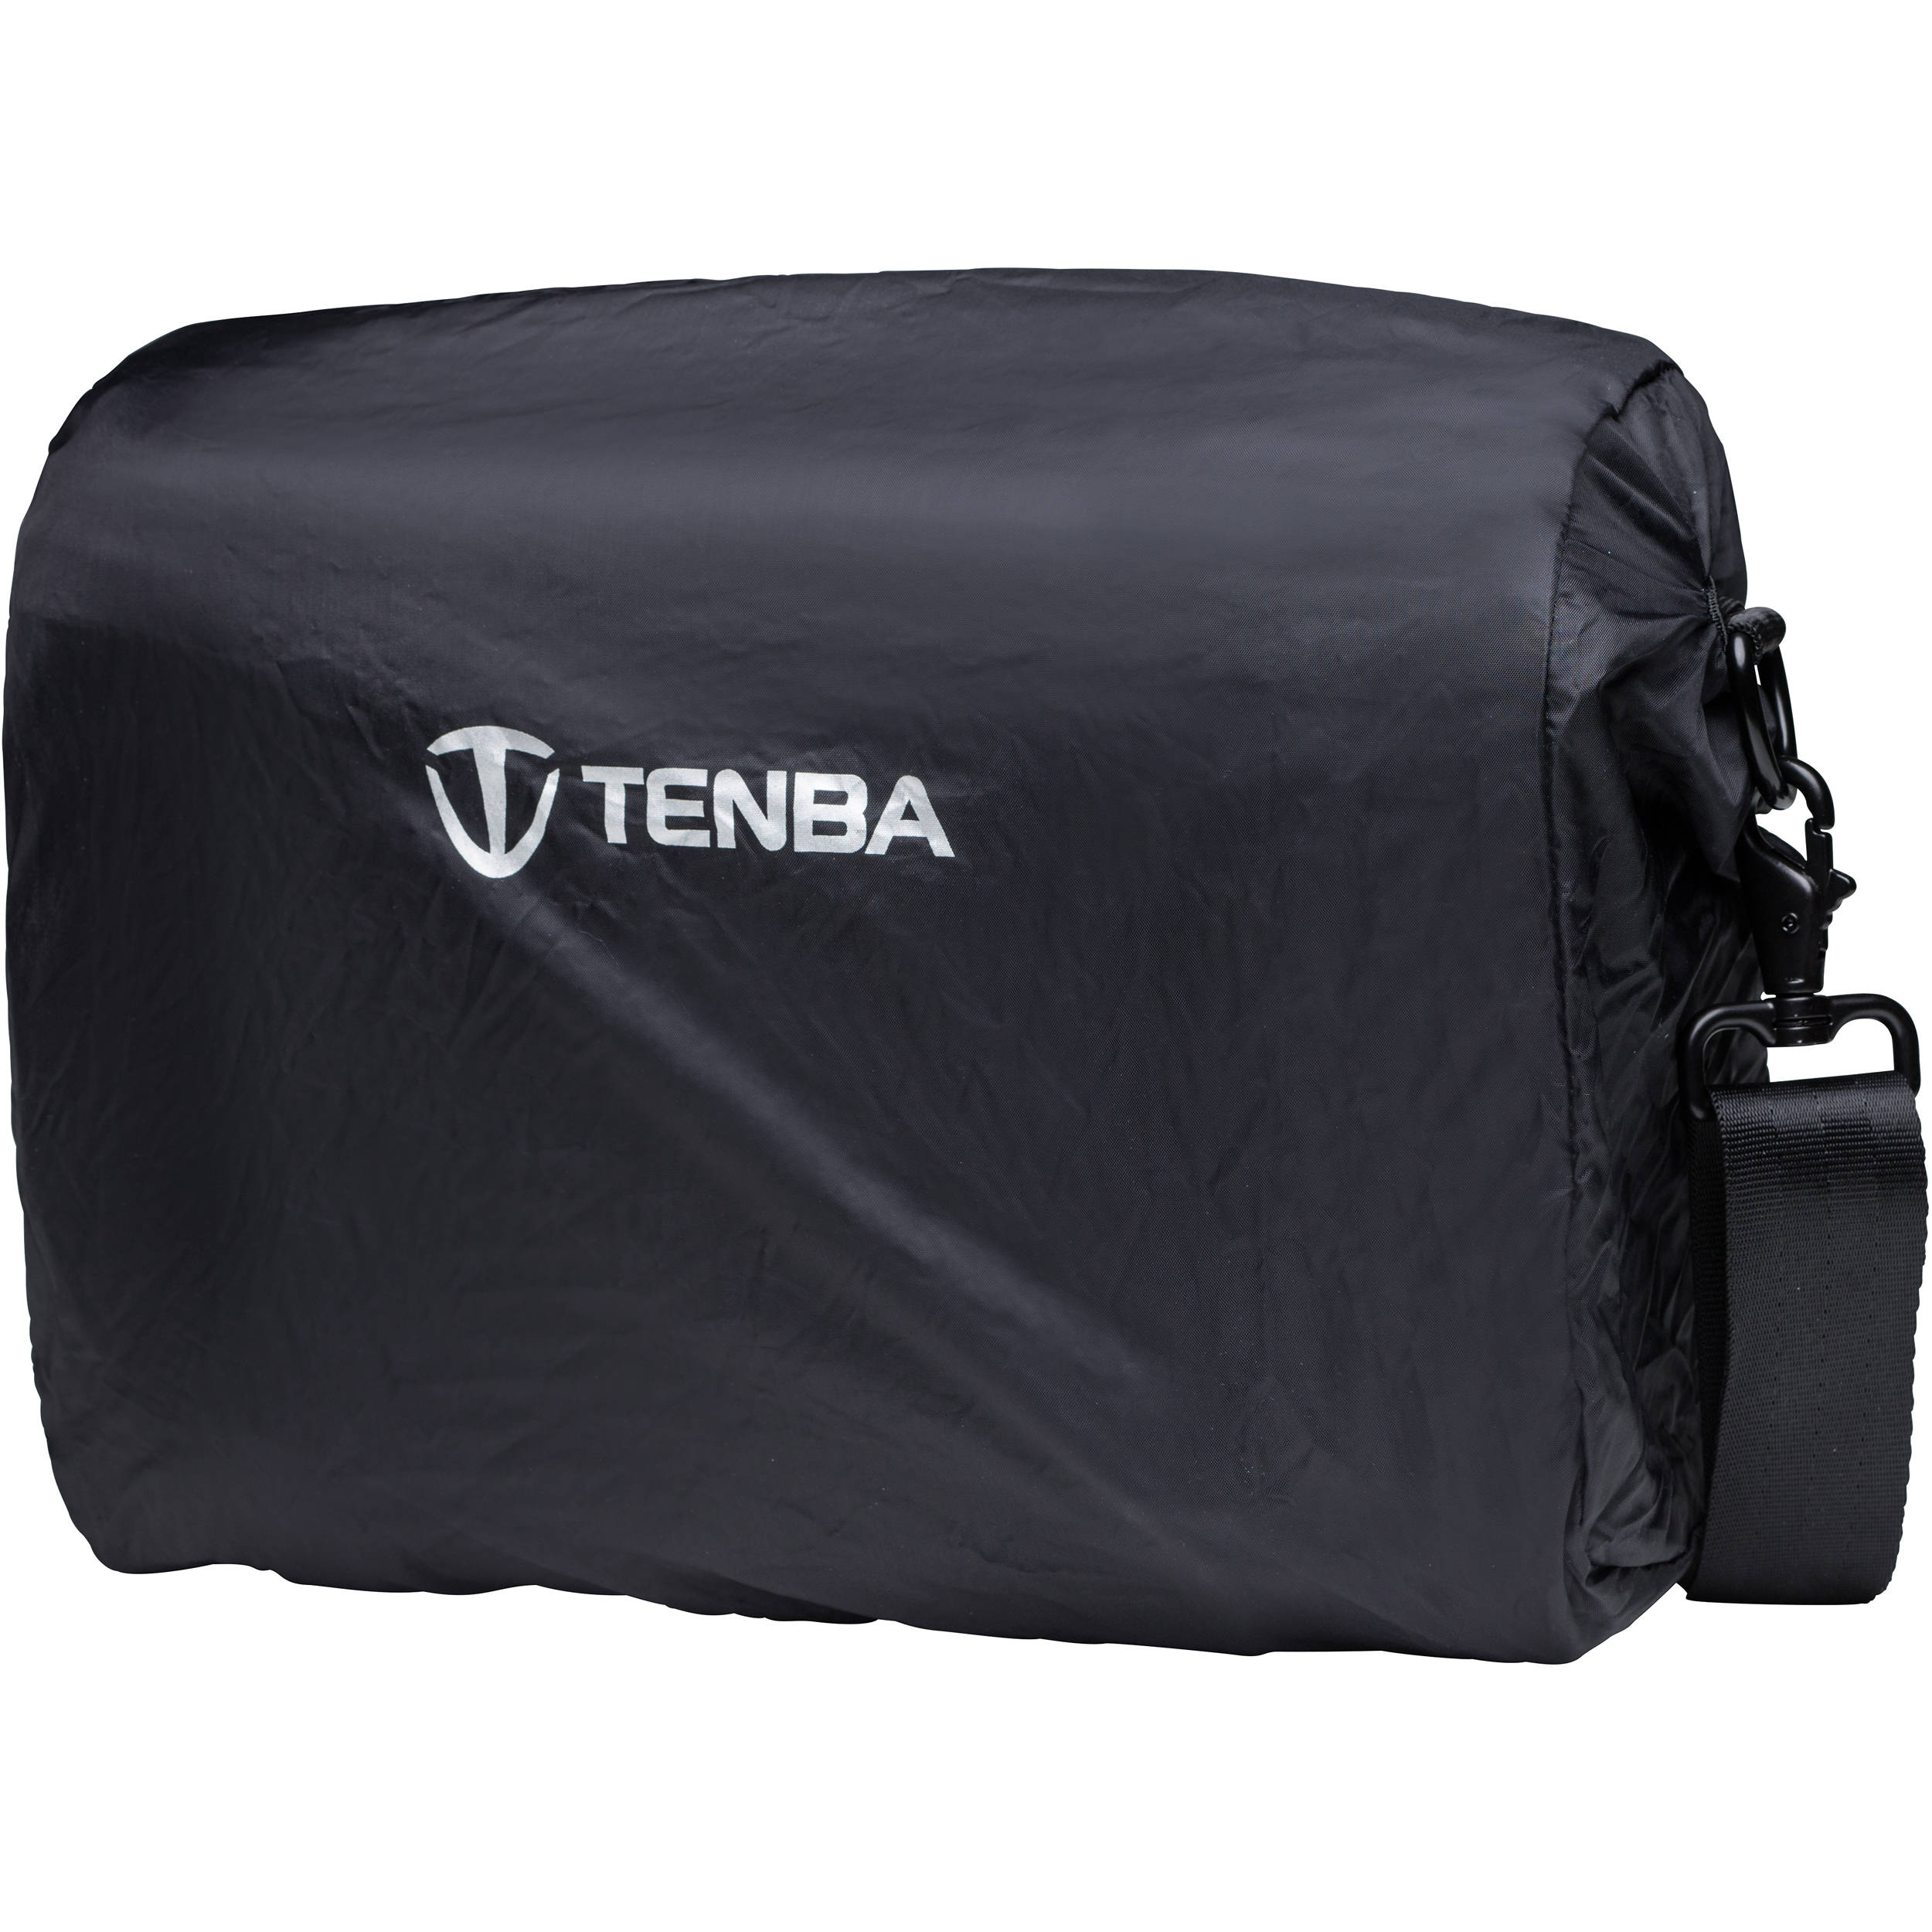 Tenba DNA 10 Messenger Bag - Cobalt